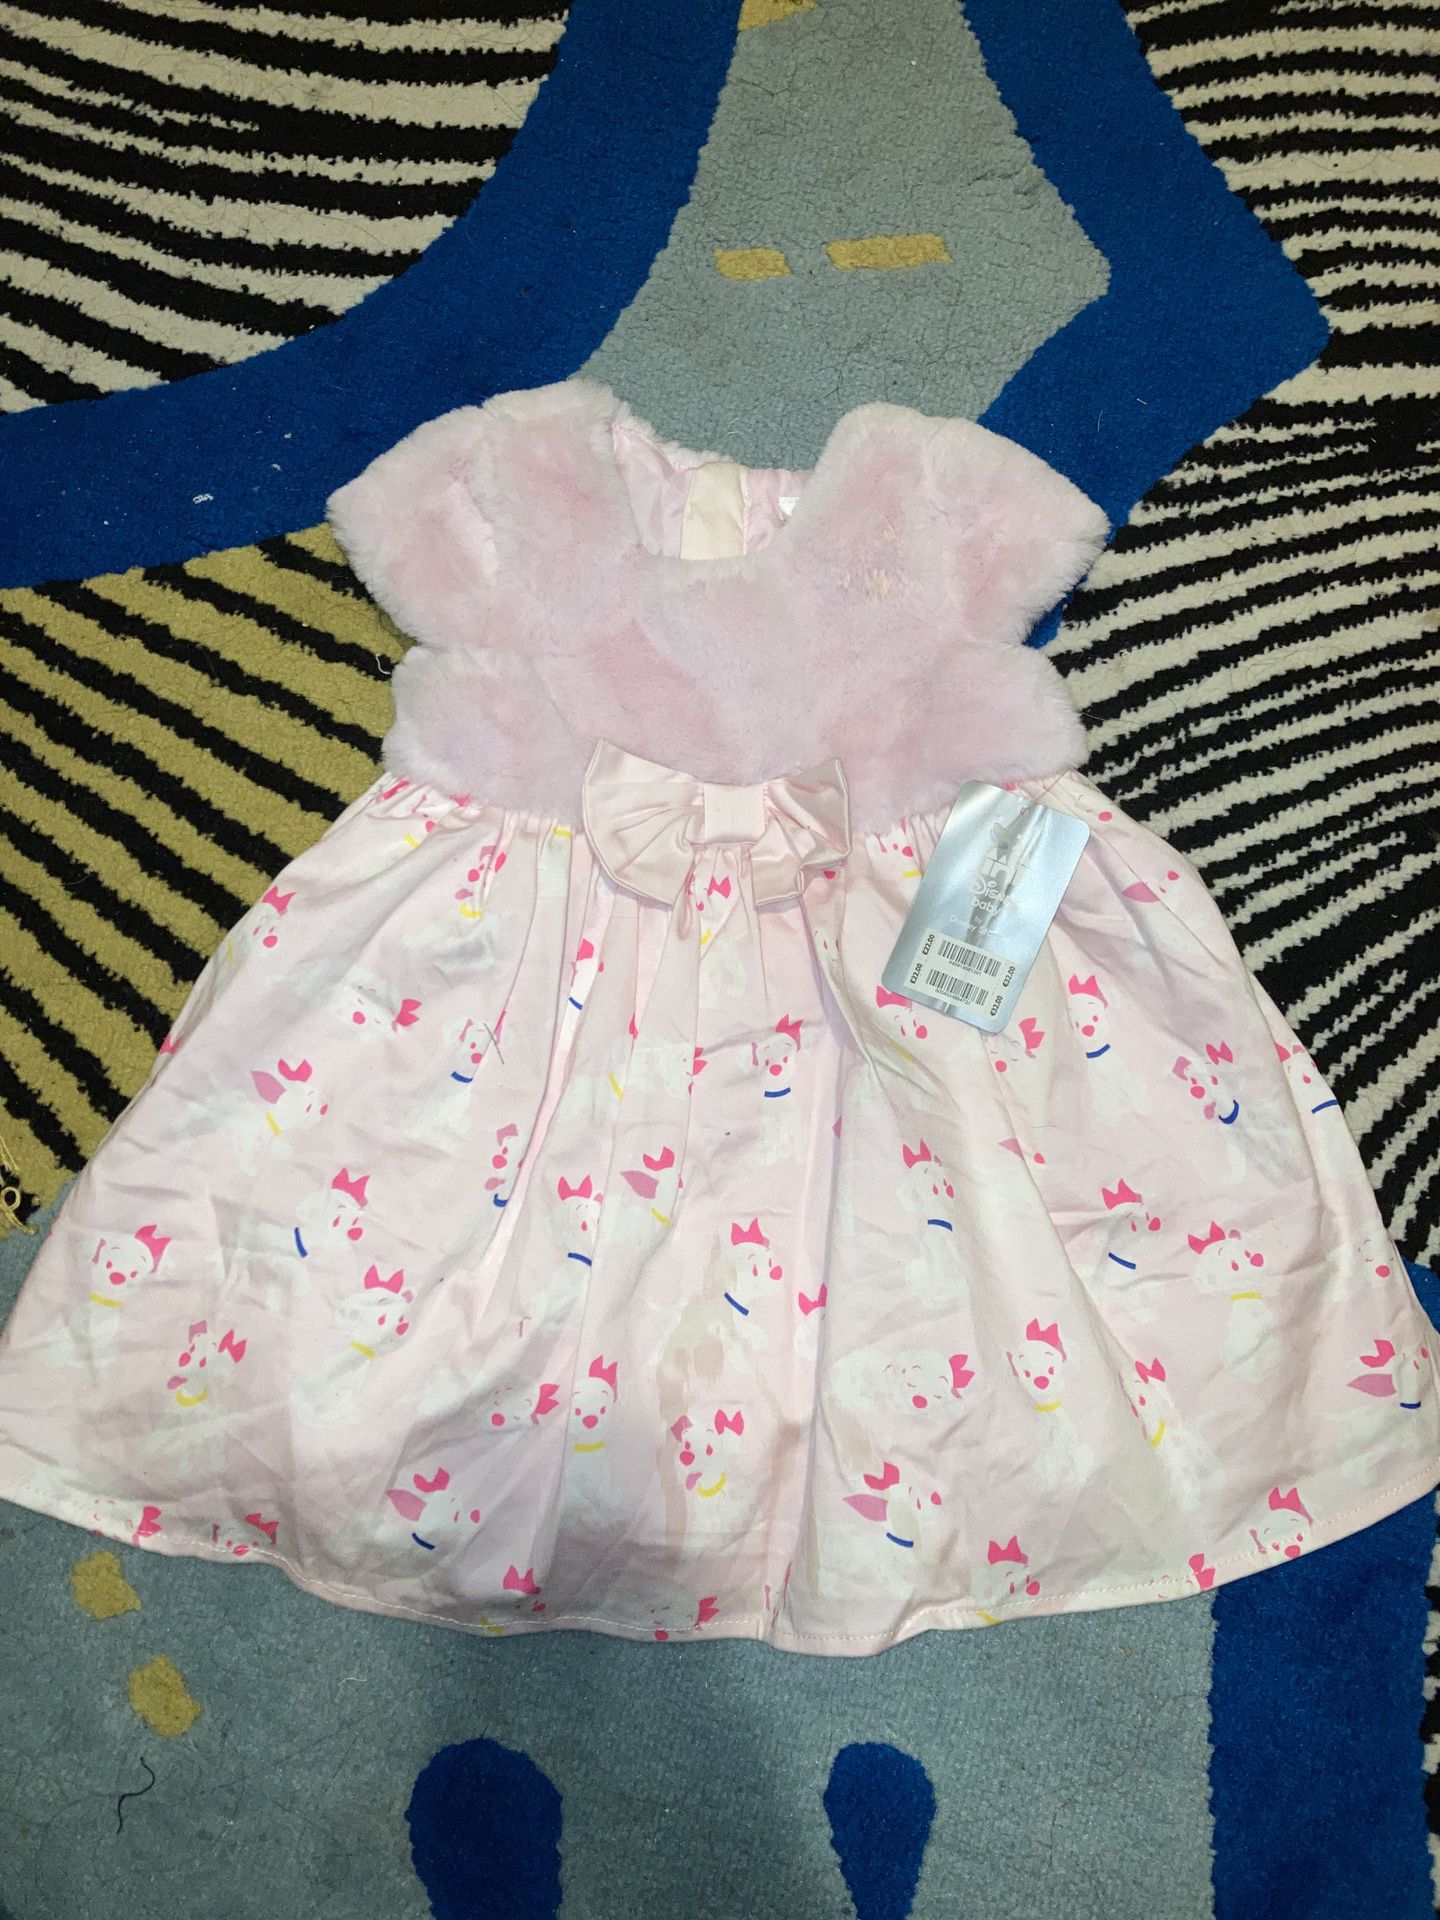 new baby girl plush dress from Disney